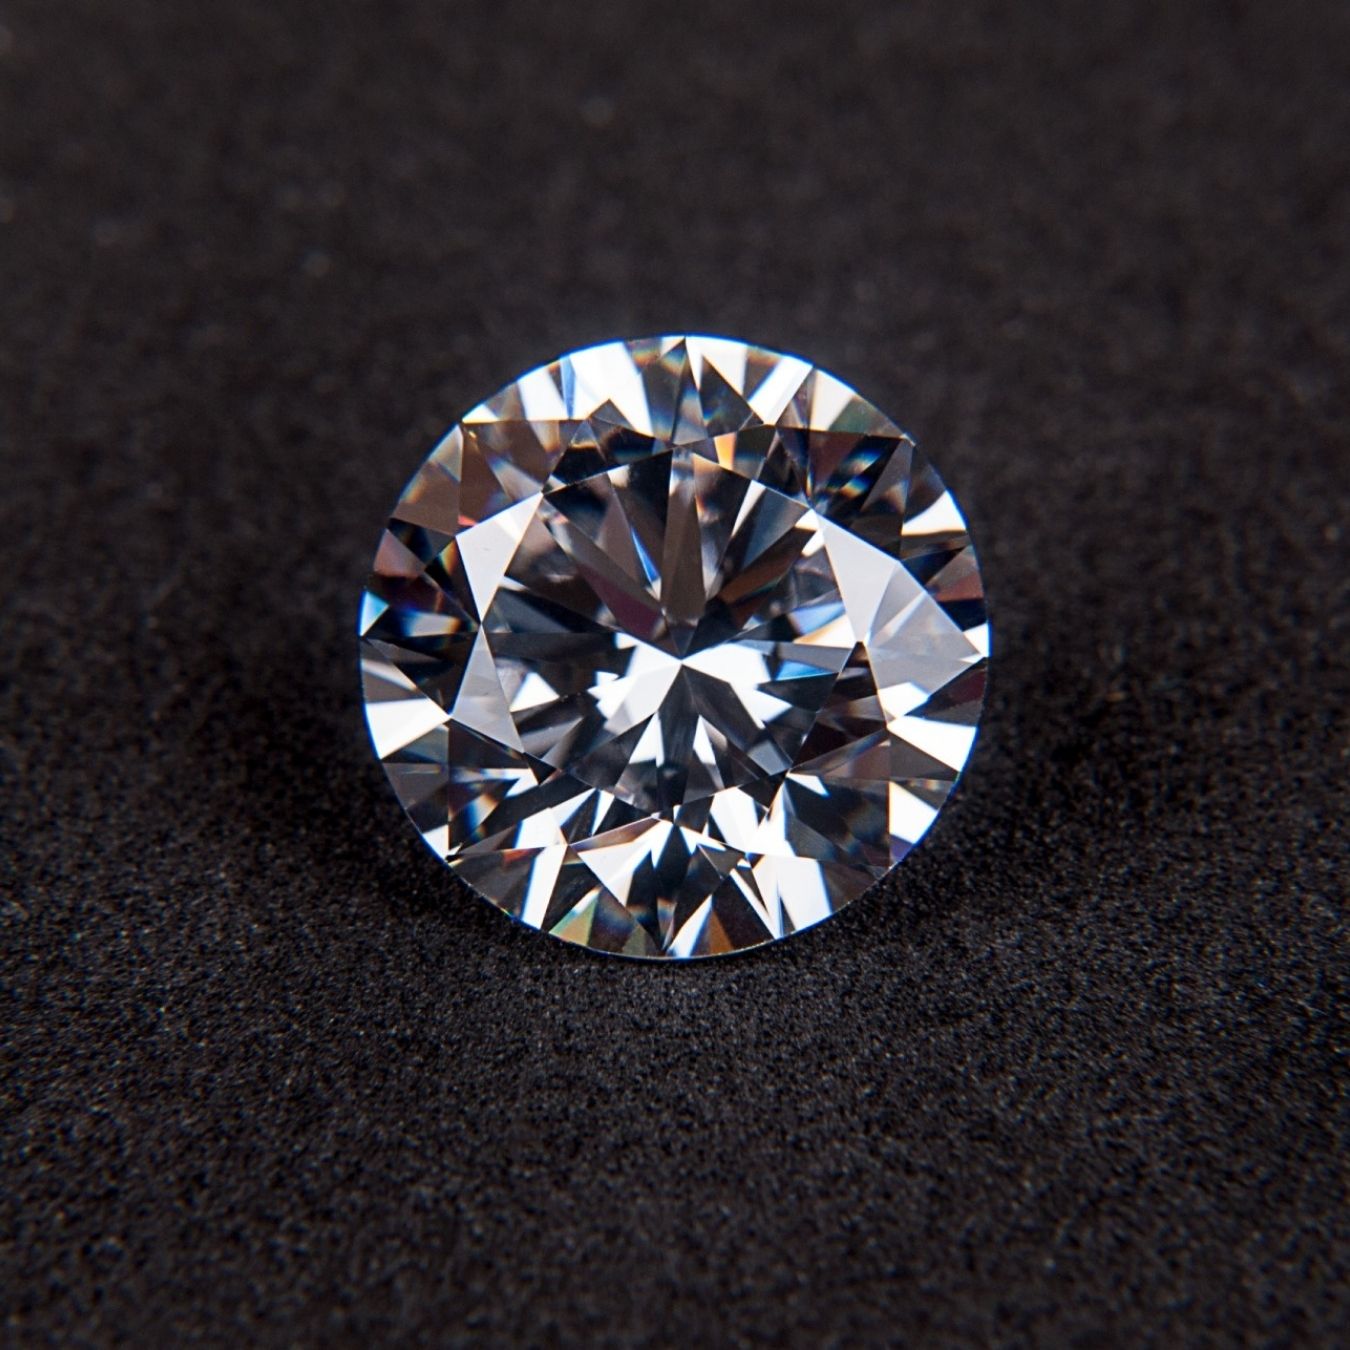 Is a brilliant a diamond?